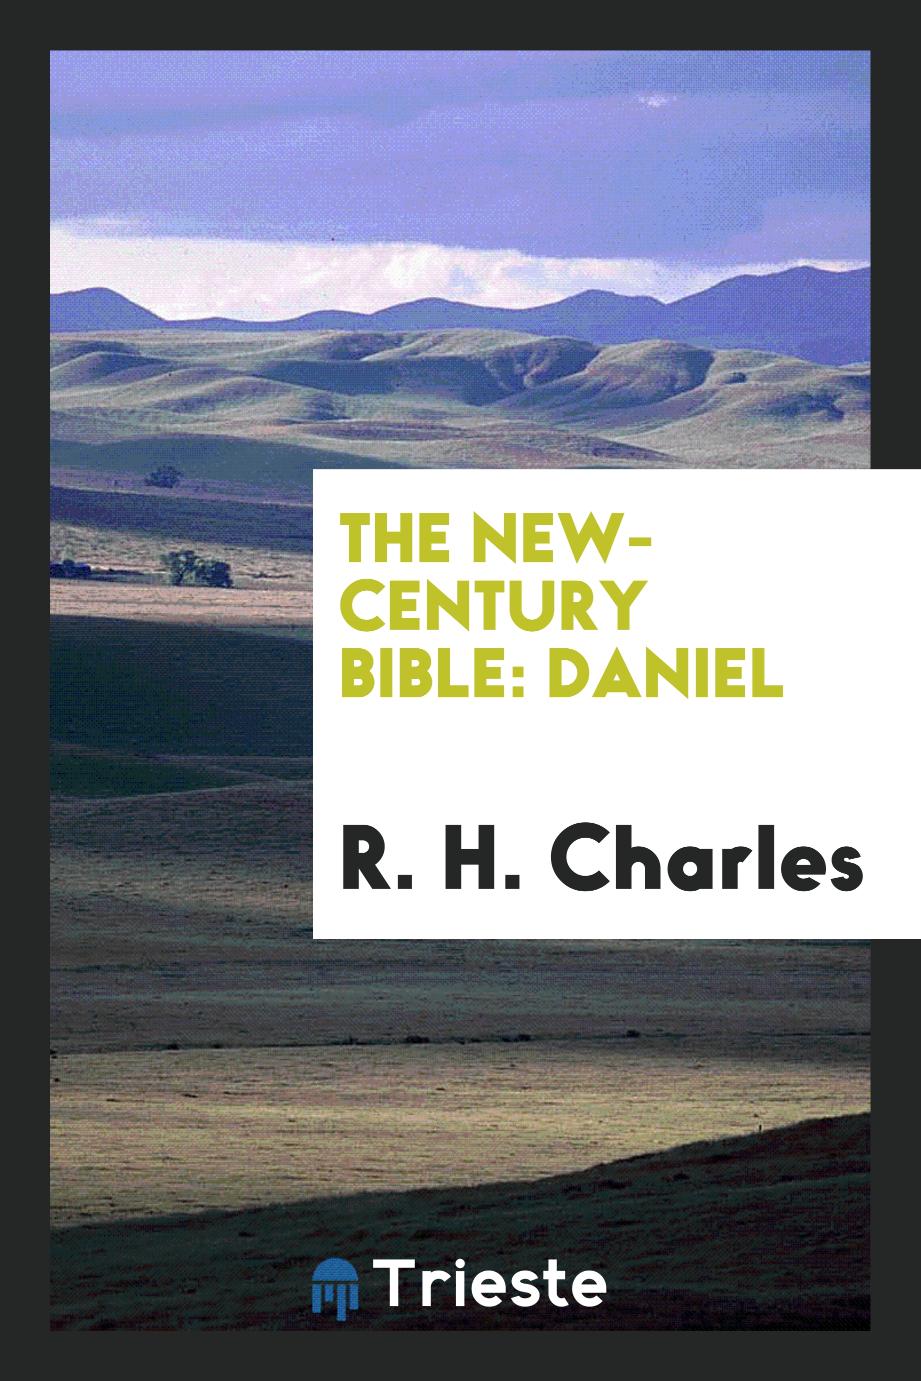 The new-century bible: Daniel